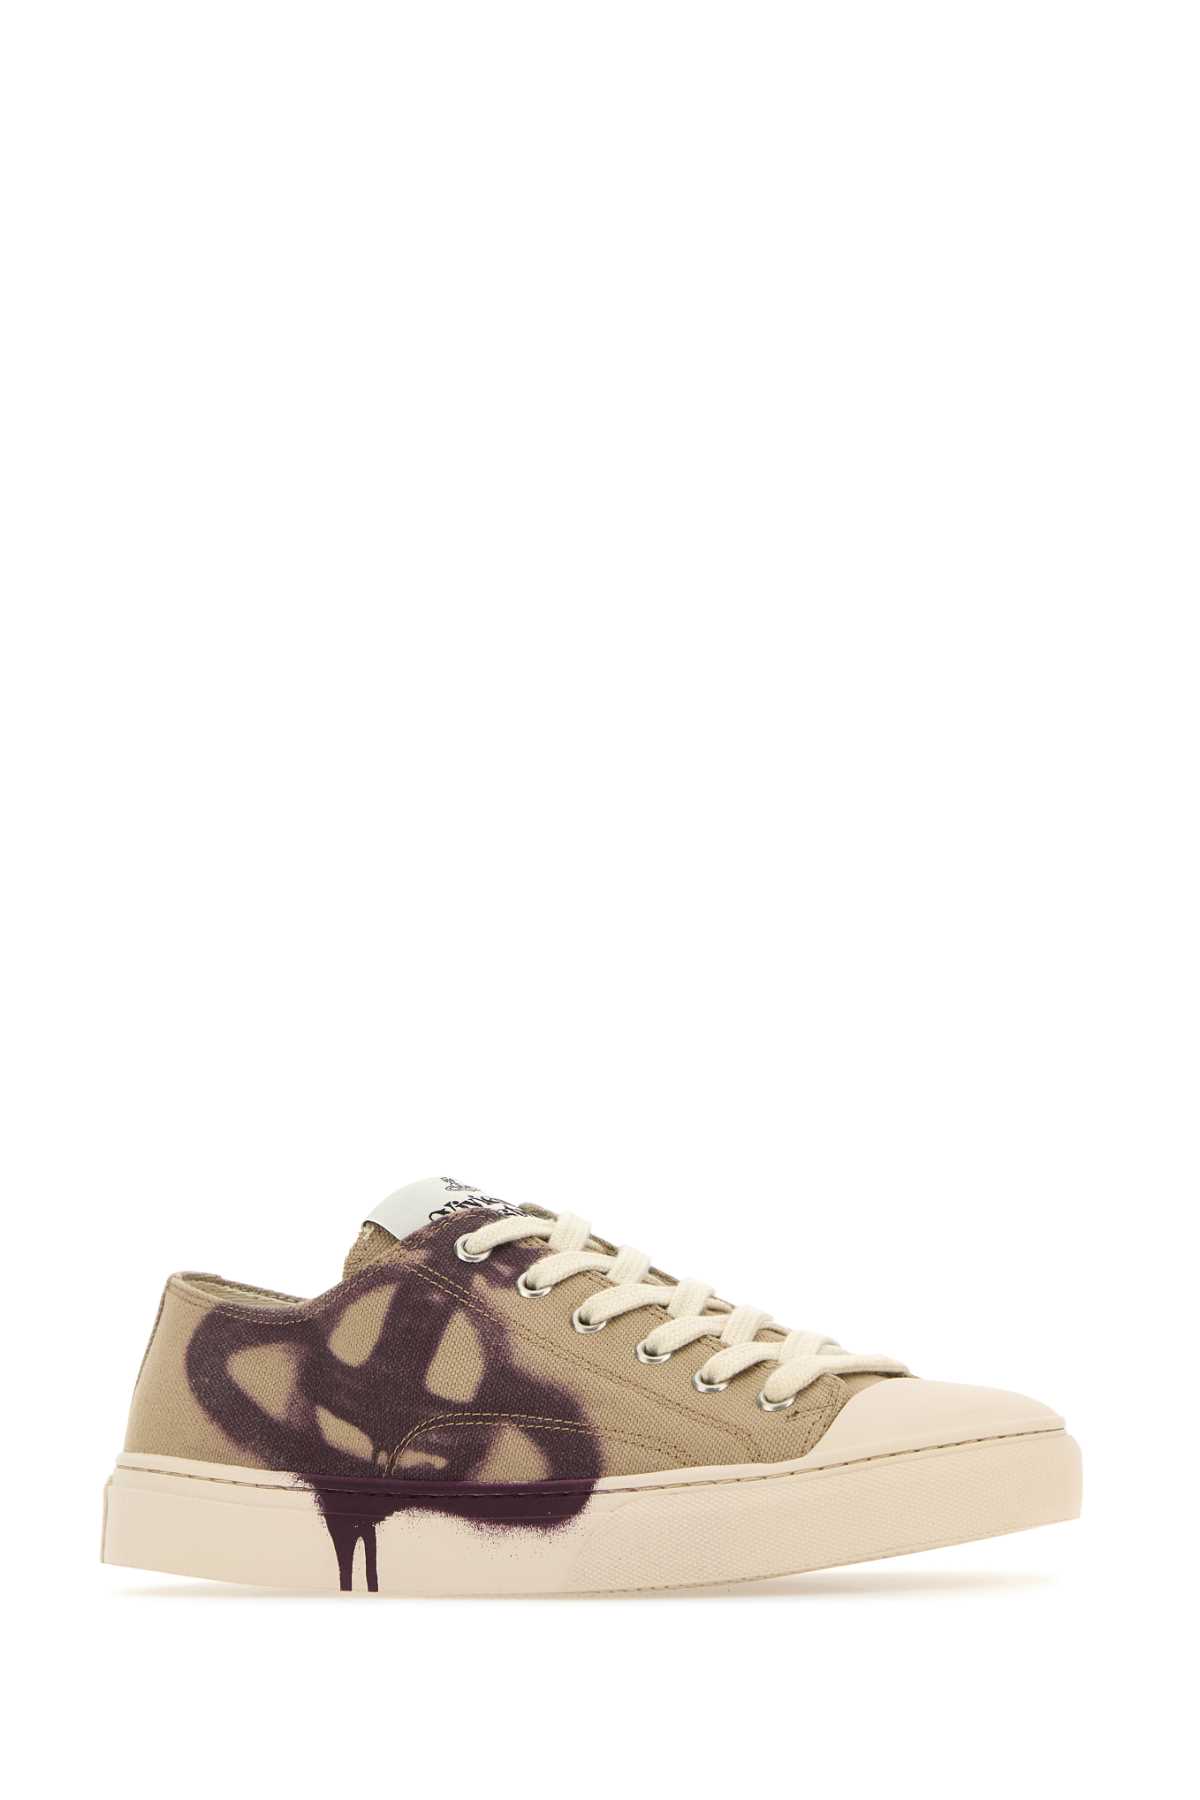 Vivienne Westwood Cappuccino Canvas Plimsoll Low Top 2.0 Sneakers In C301